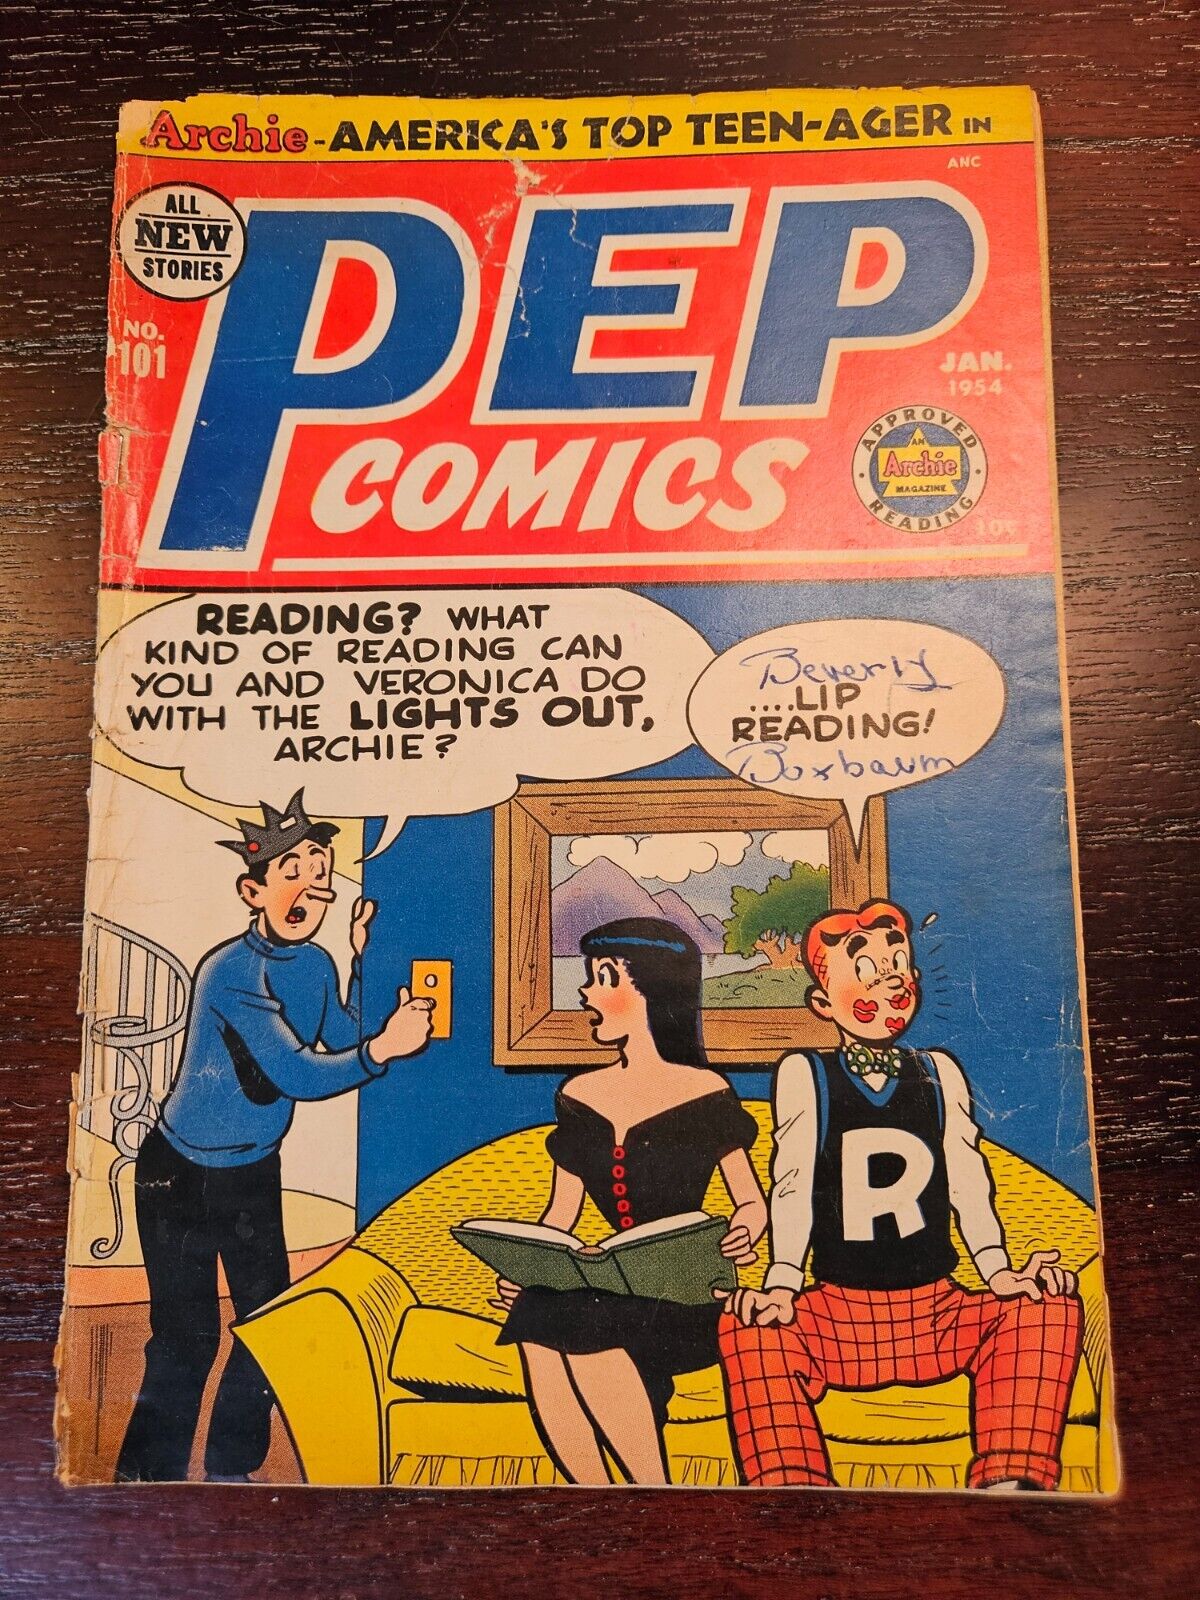 Archie PEP COMICS #101 comic book 1954 Golden Age veronica GOOD